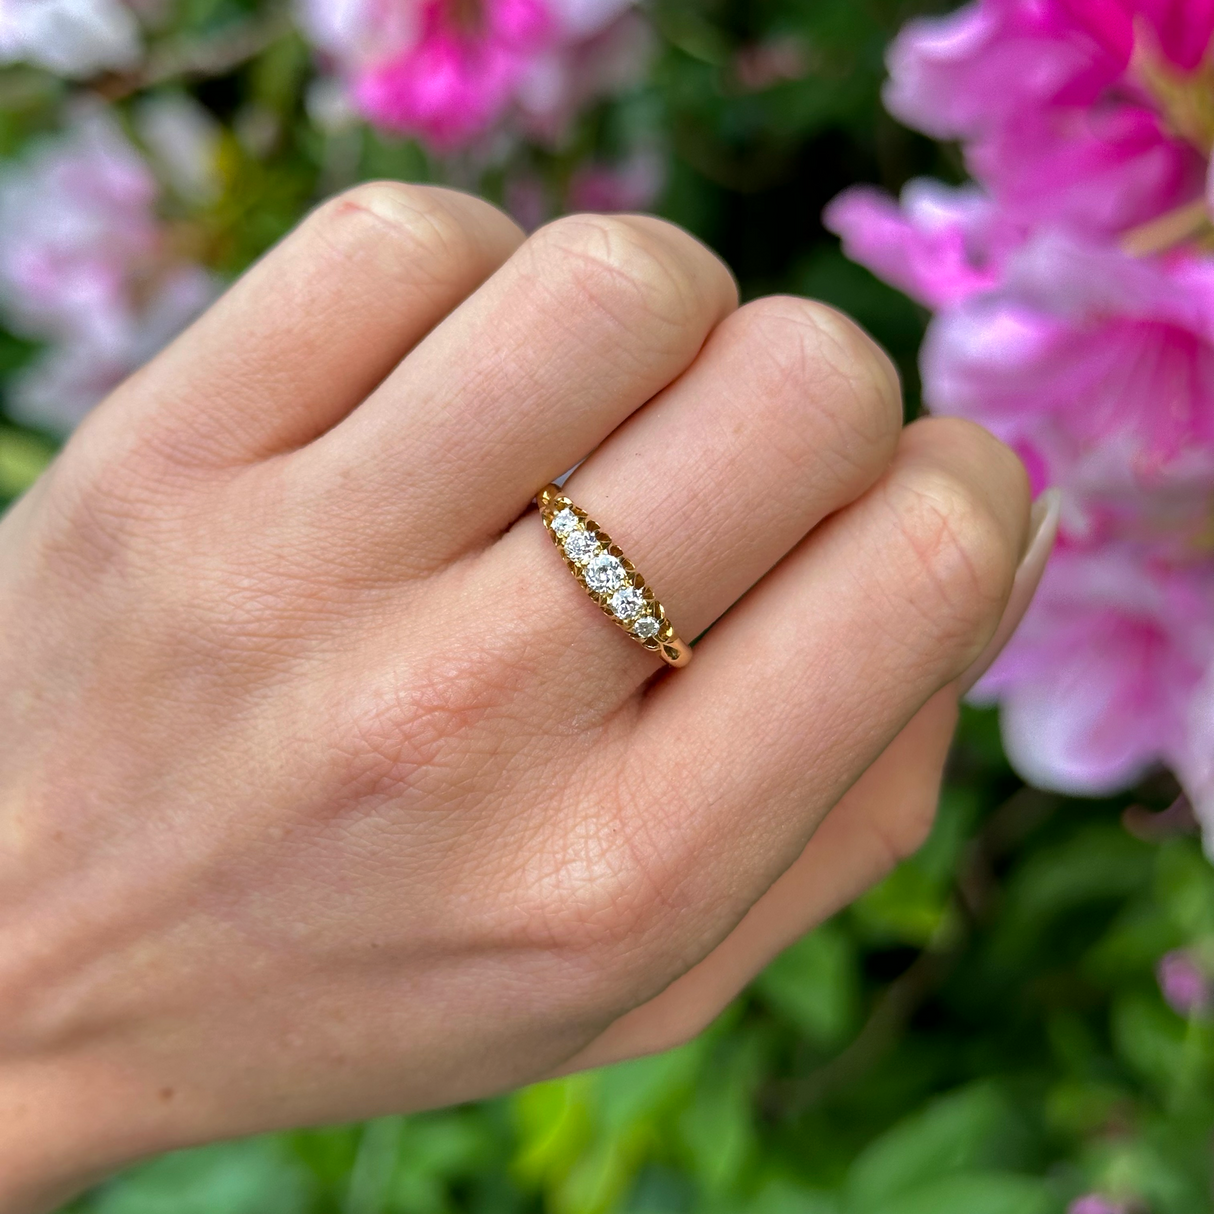 Antique, Edwardian Five-Stone Diamond Ring, 18ct Yellow Gold worn on hand.